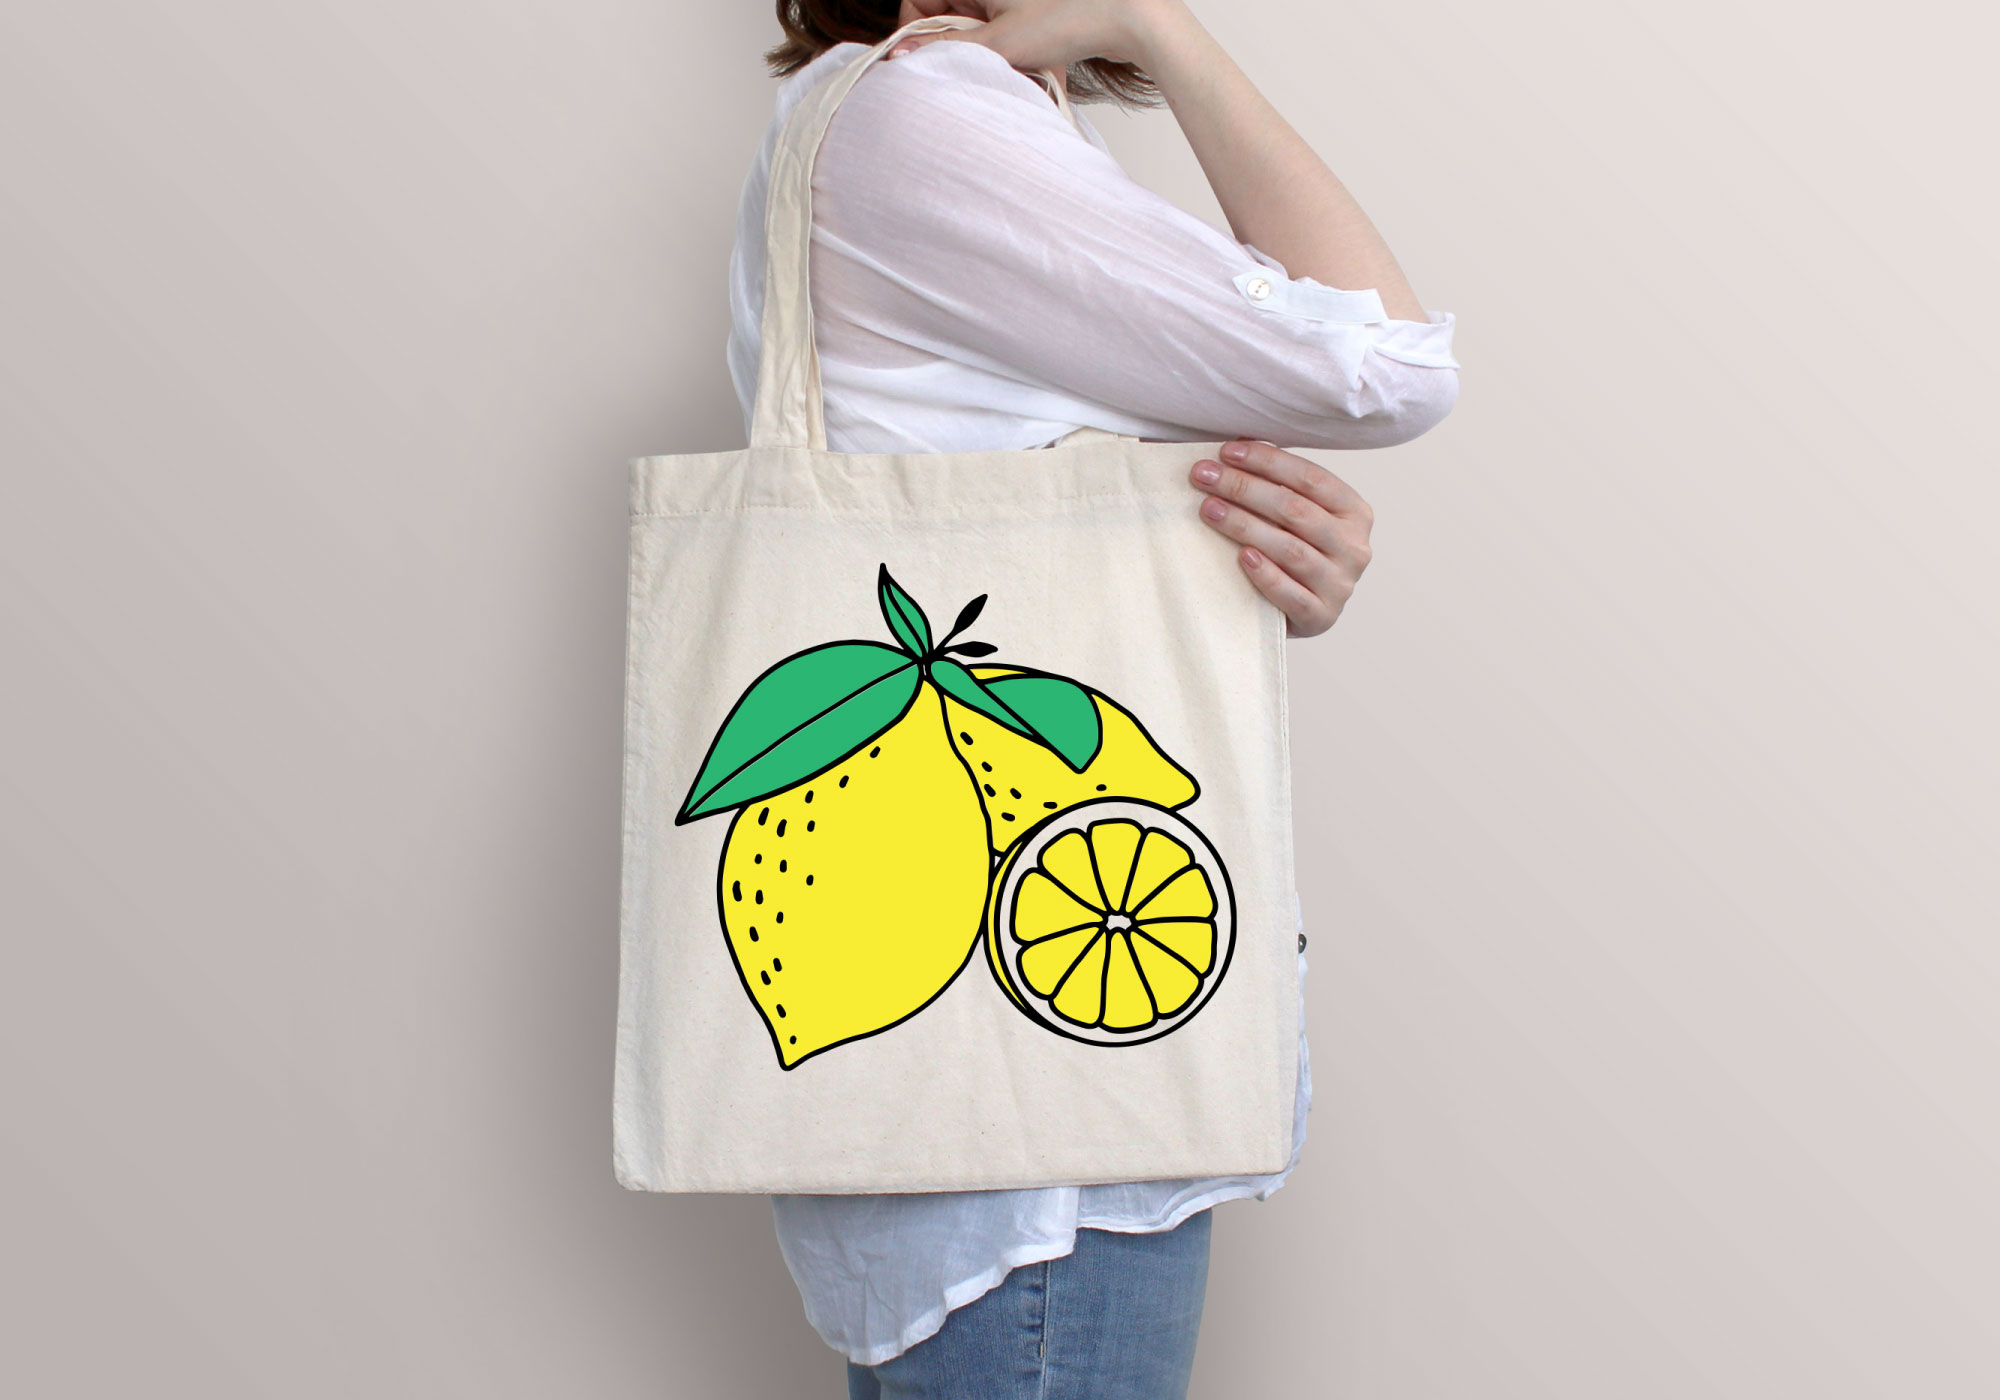 Free Handdrawn Lemon SVG